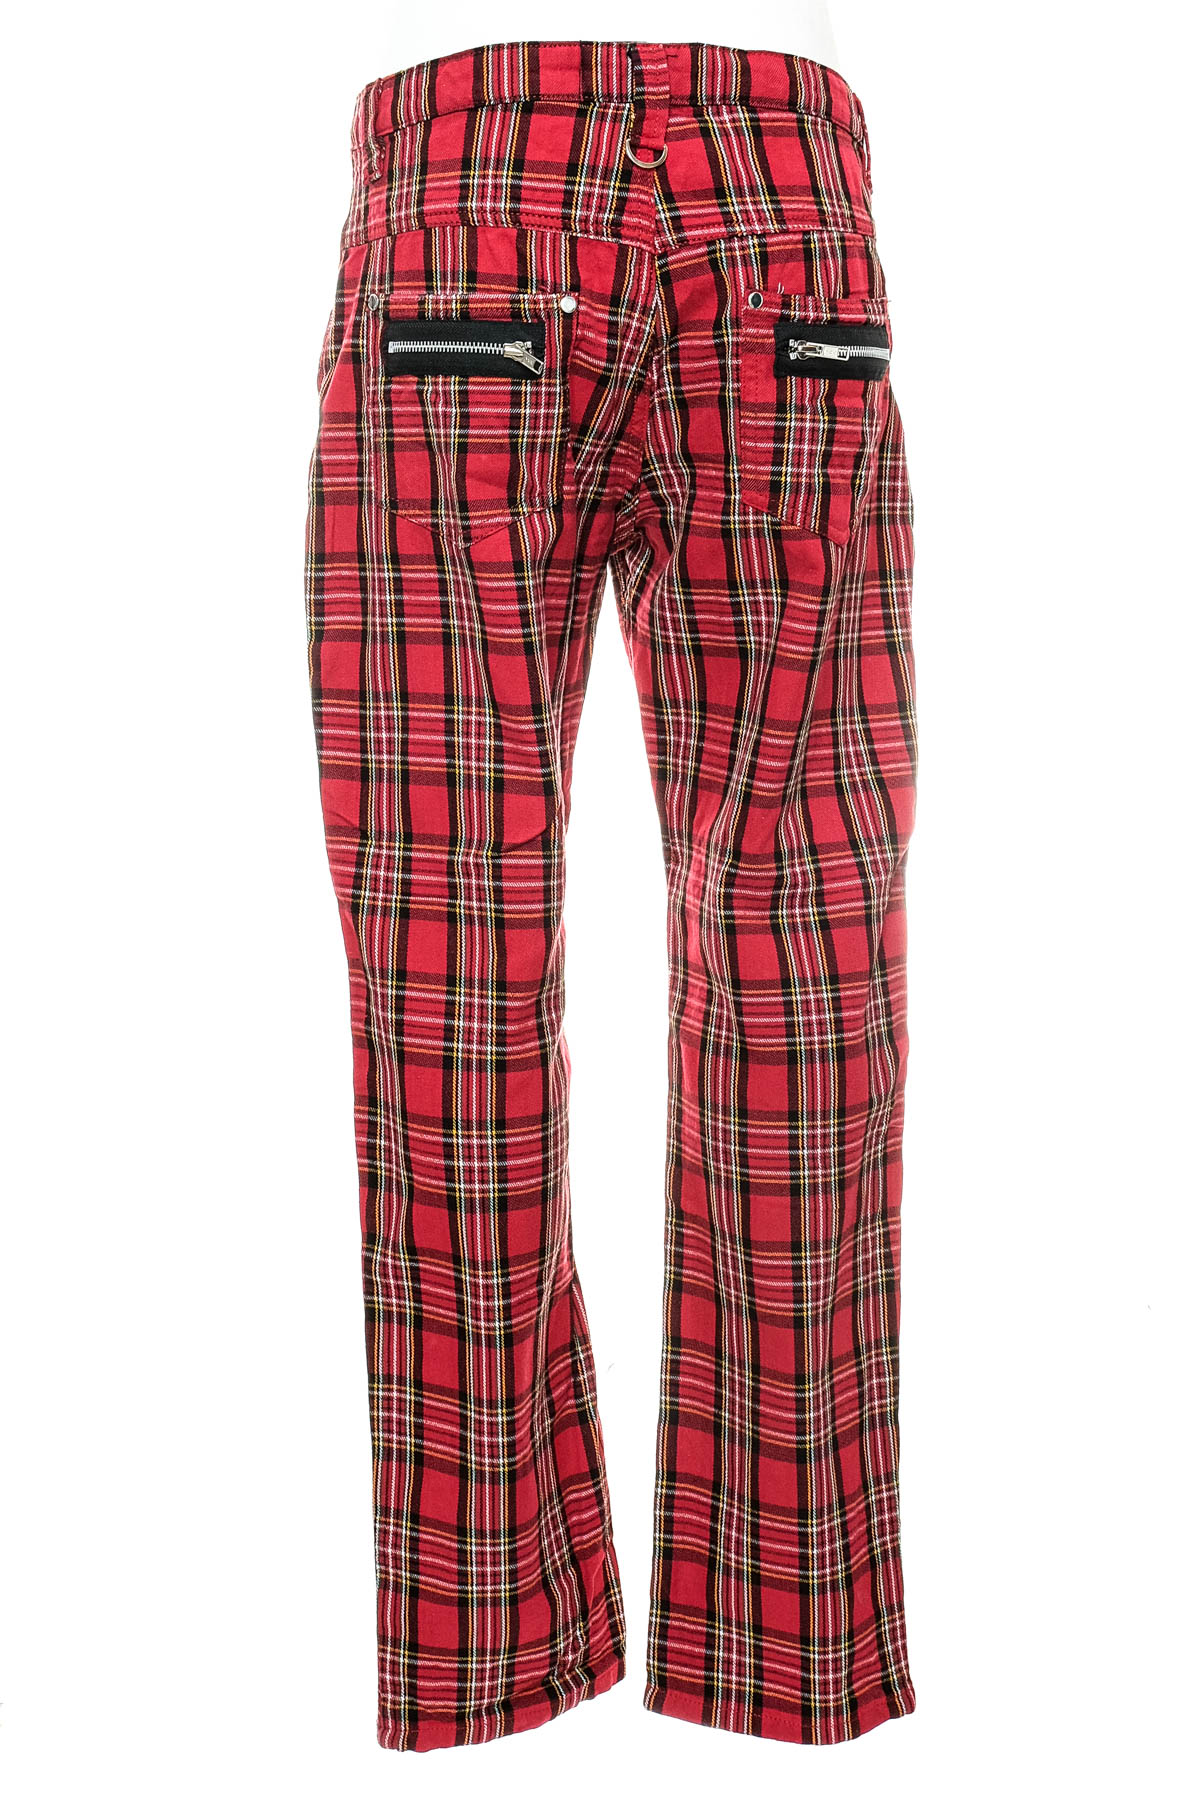 Pantalon pentru bărbați - Ro Rox - 1